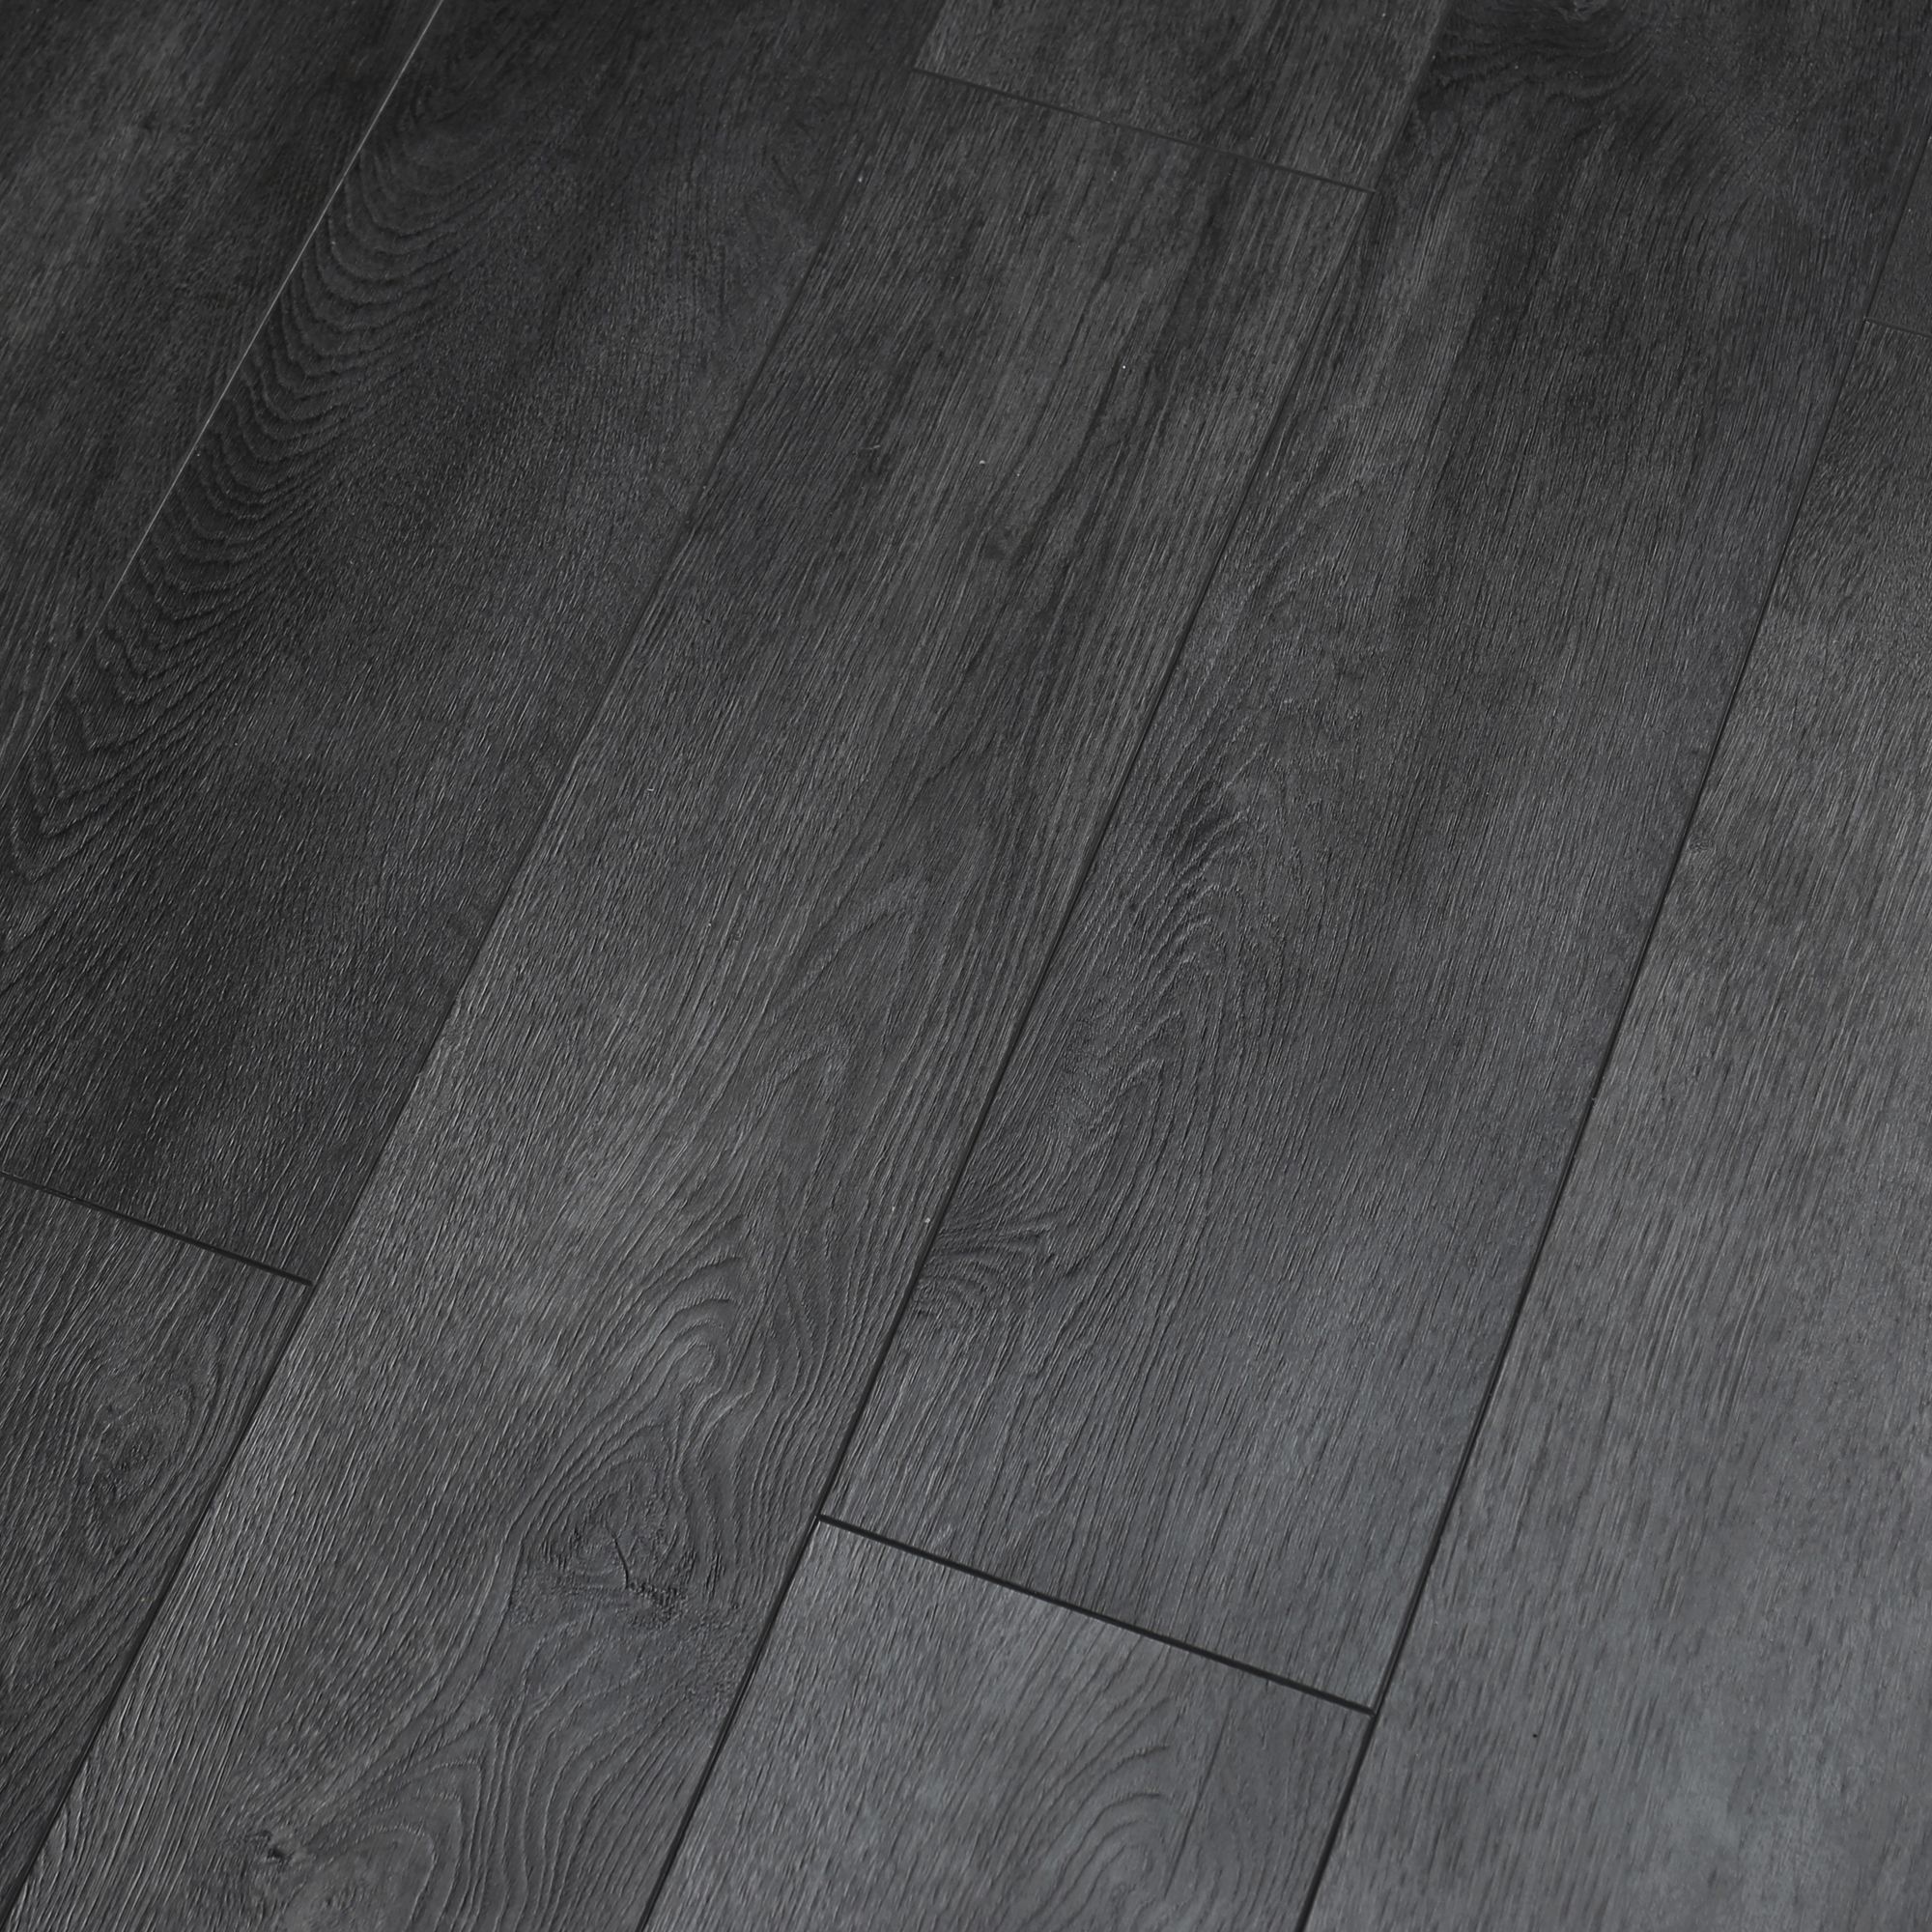 Novocore Embossed Dark Grey Luxury Vinyl Flooring - 1.98m2